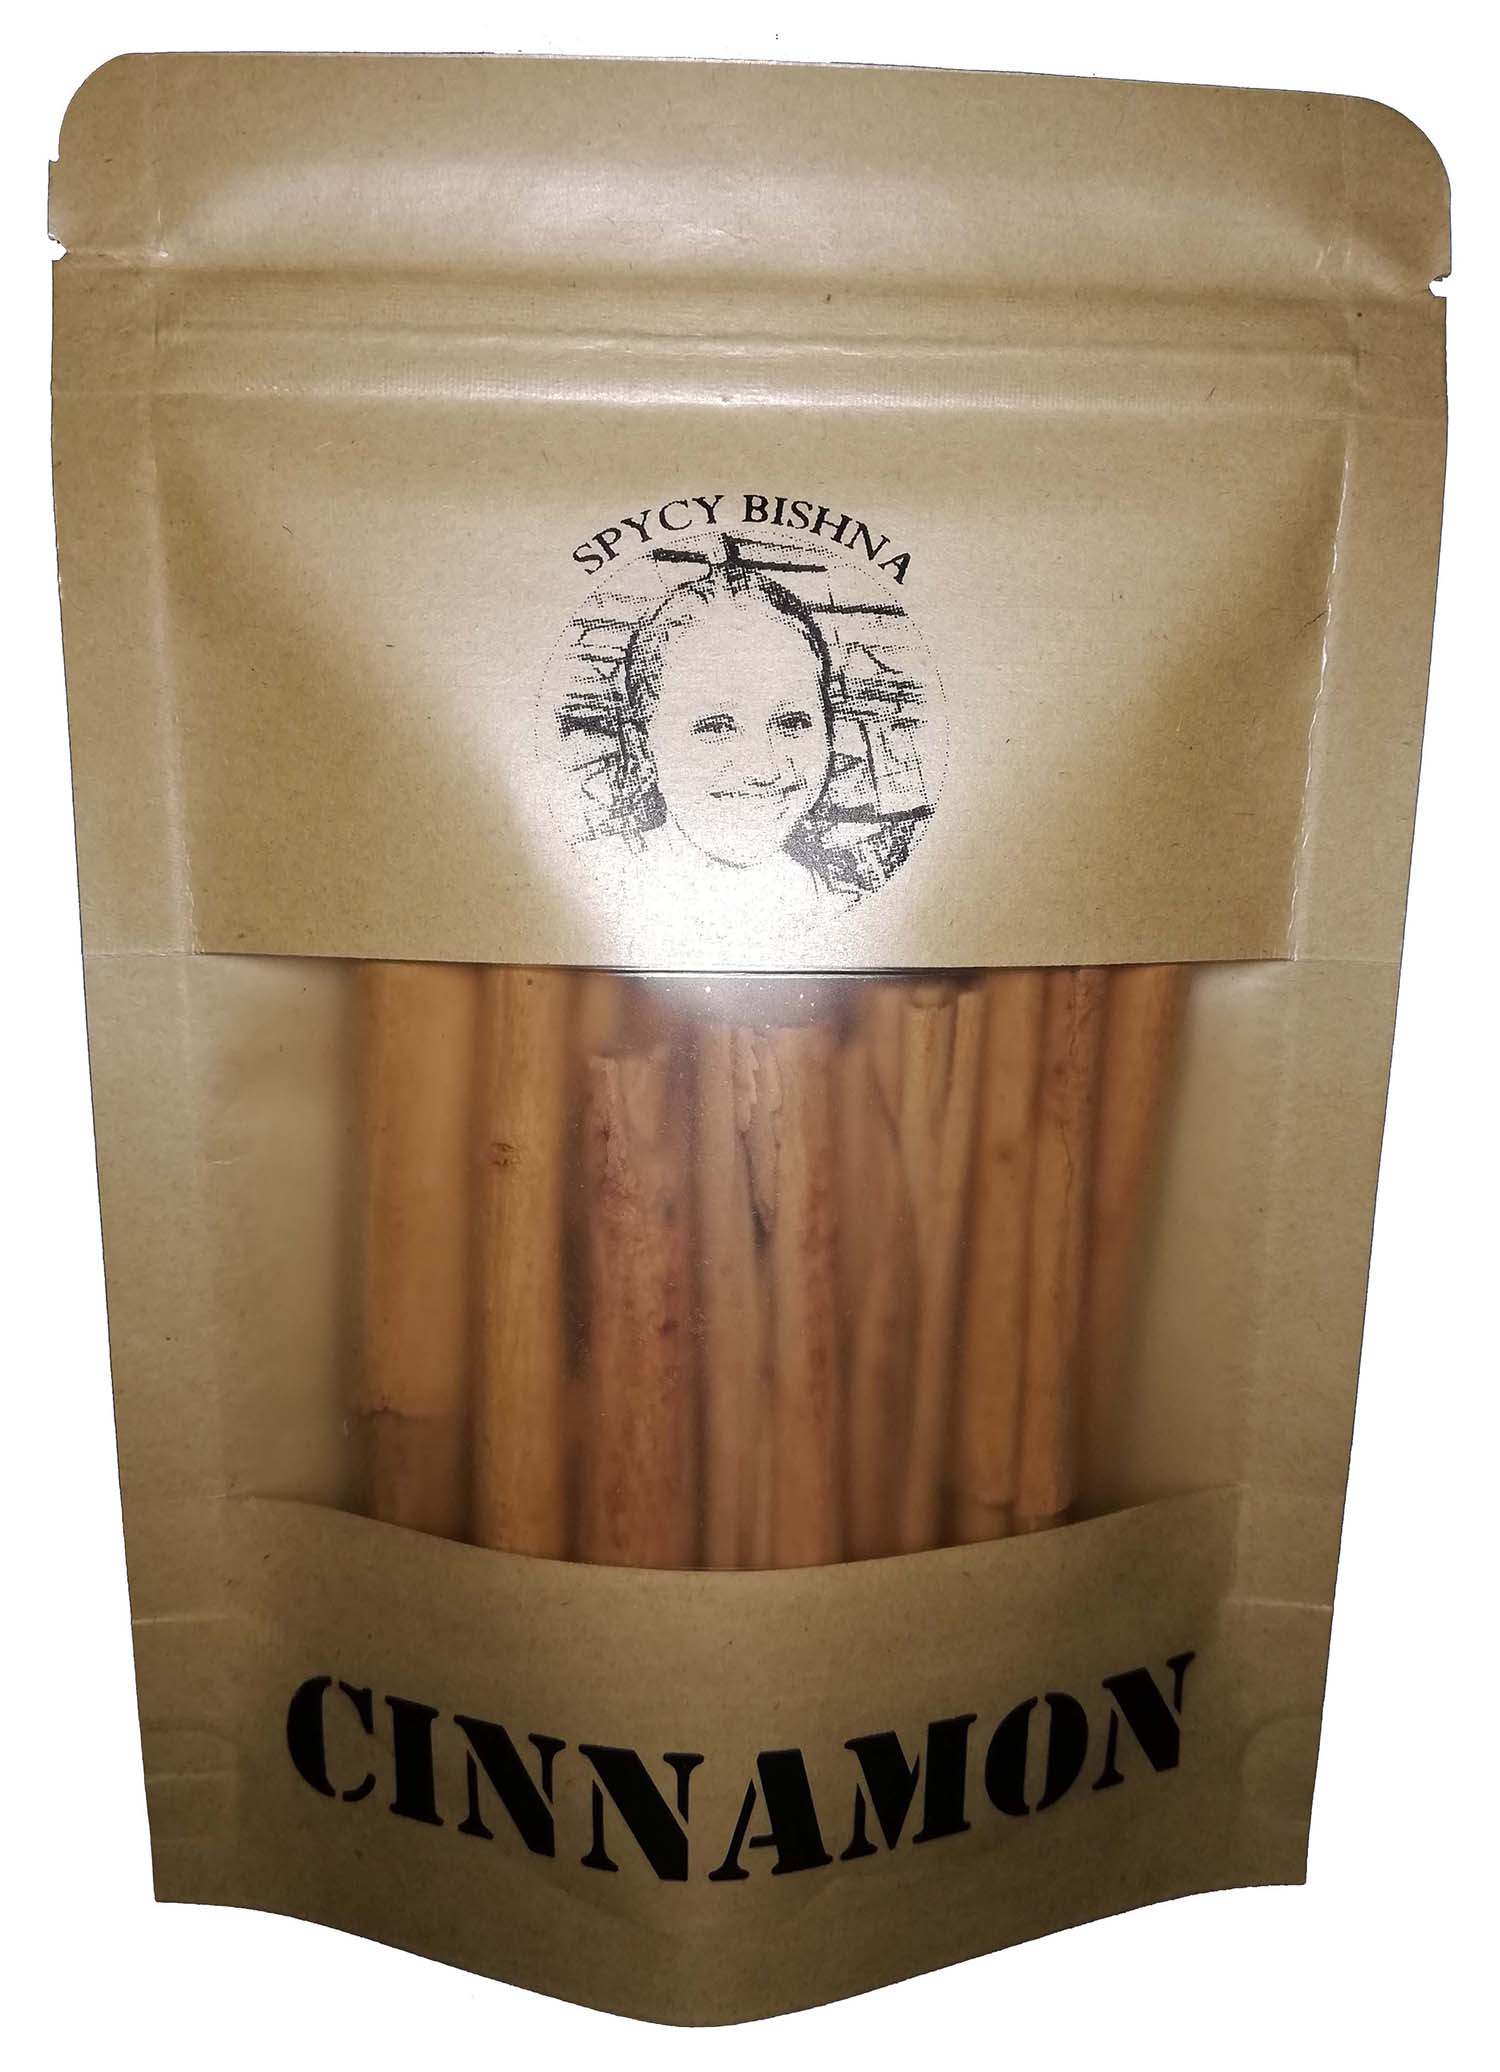 Cinnamon stick 75 gr. Sri Lanka